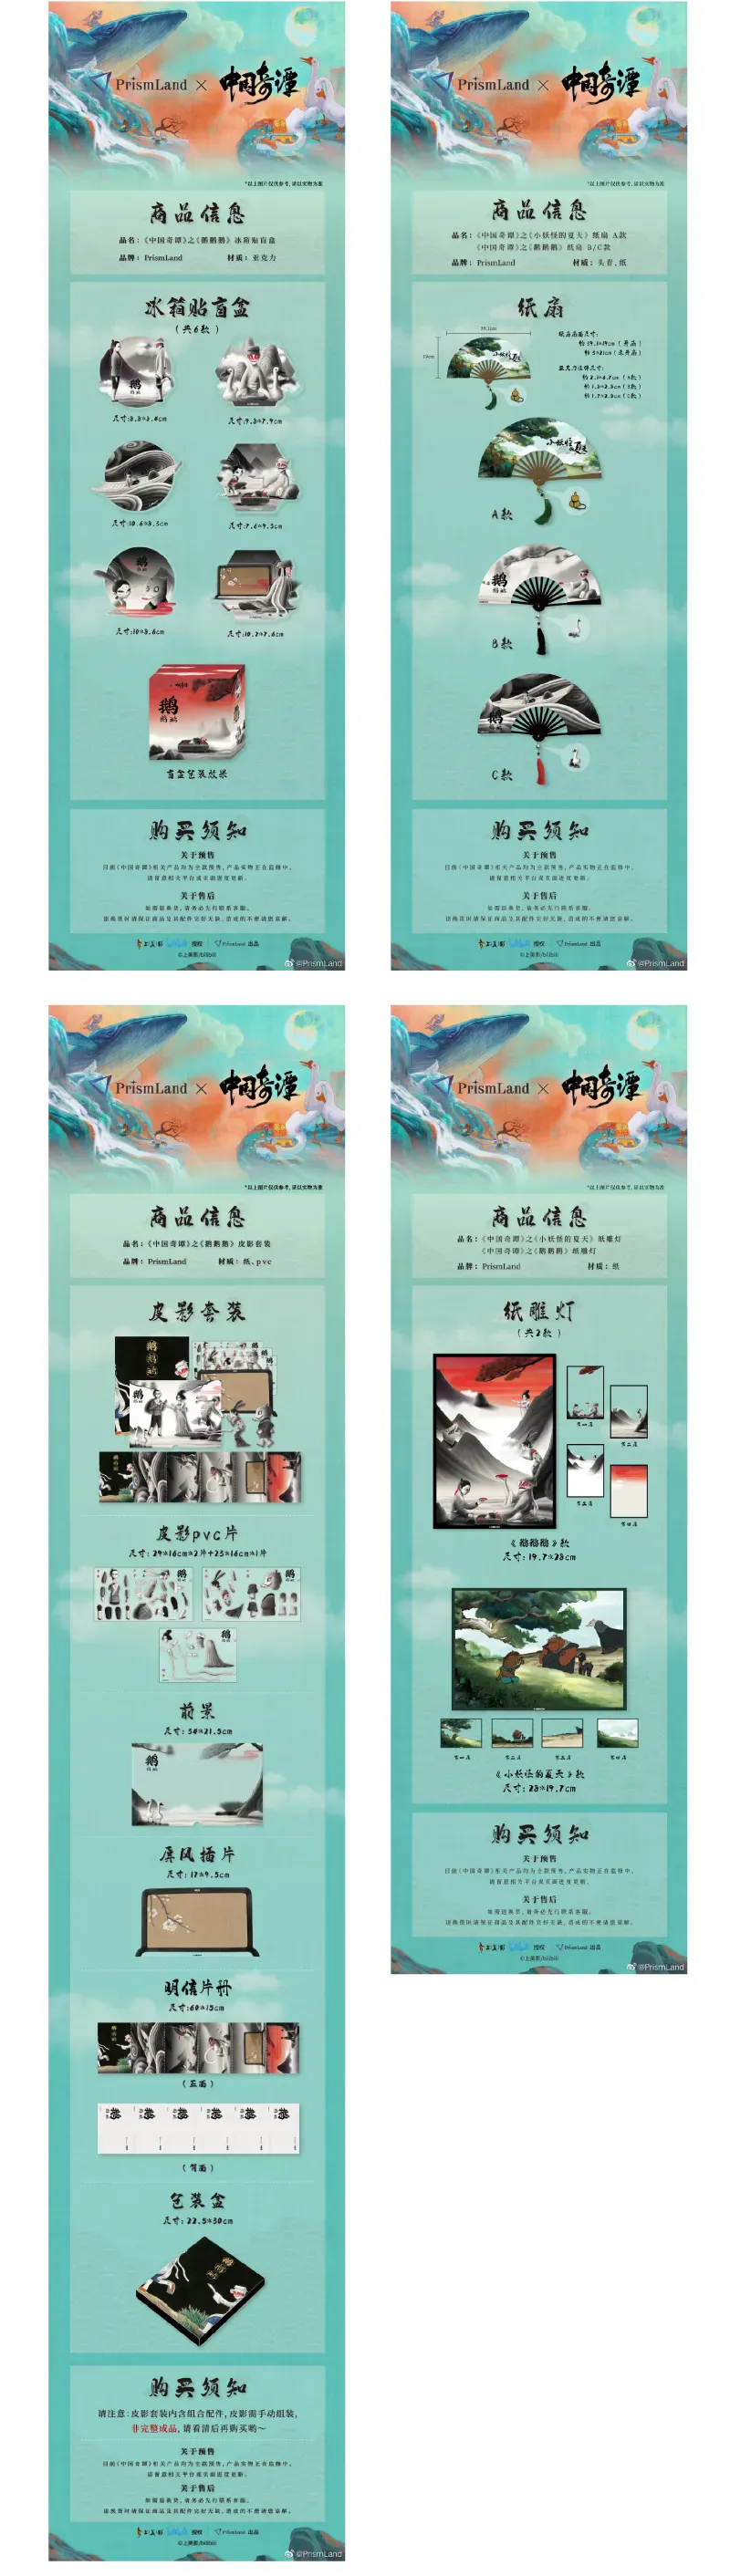 Original Merchandise China奇谭 image document